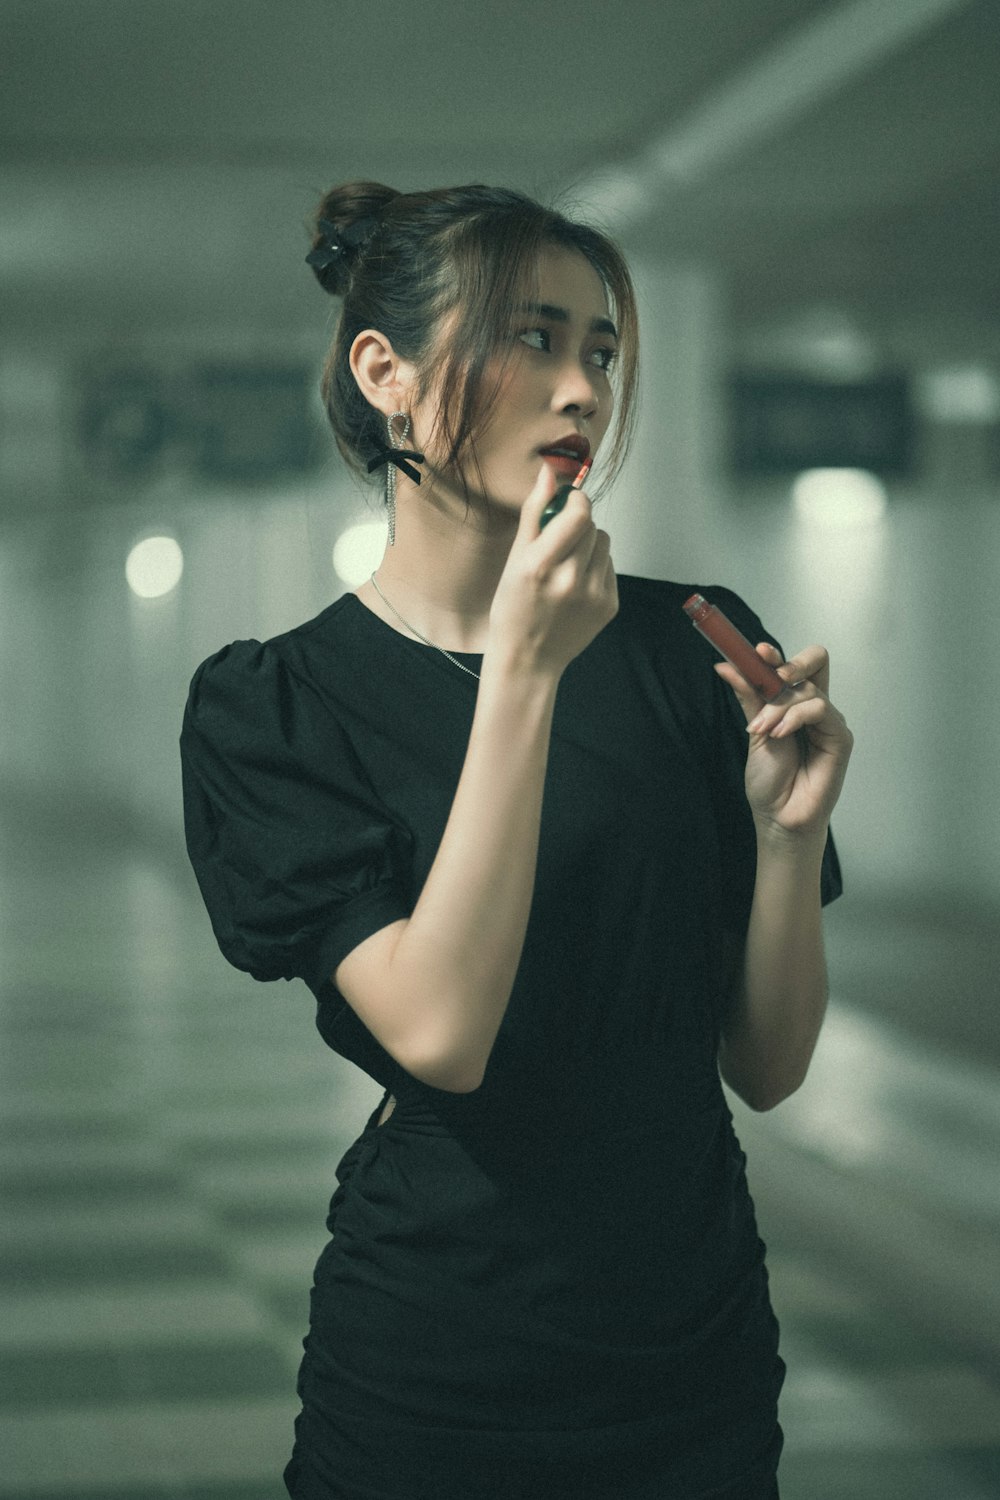 a woman in a black dress smoking a cigarette